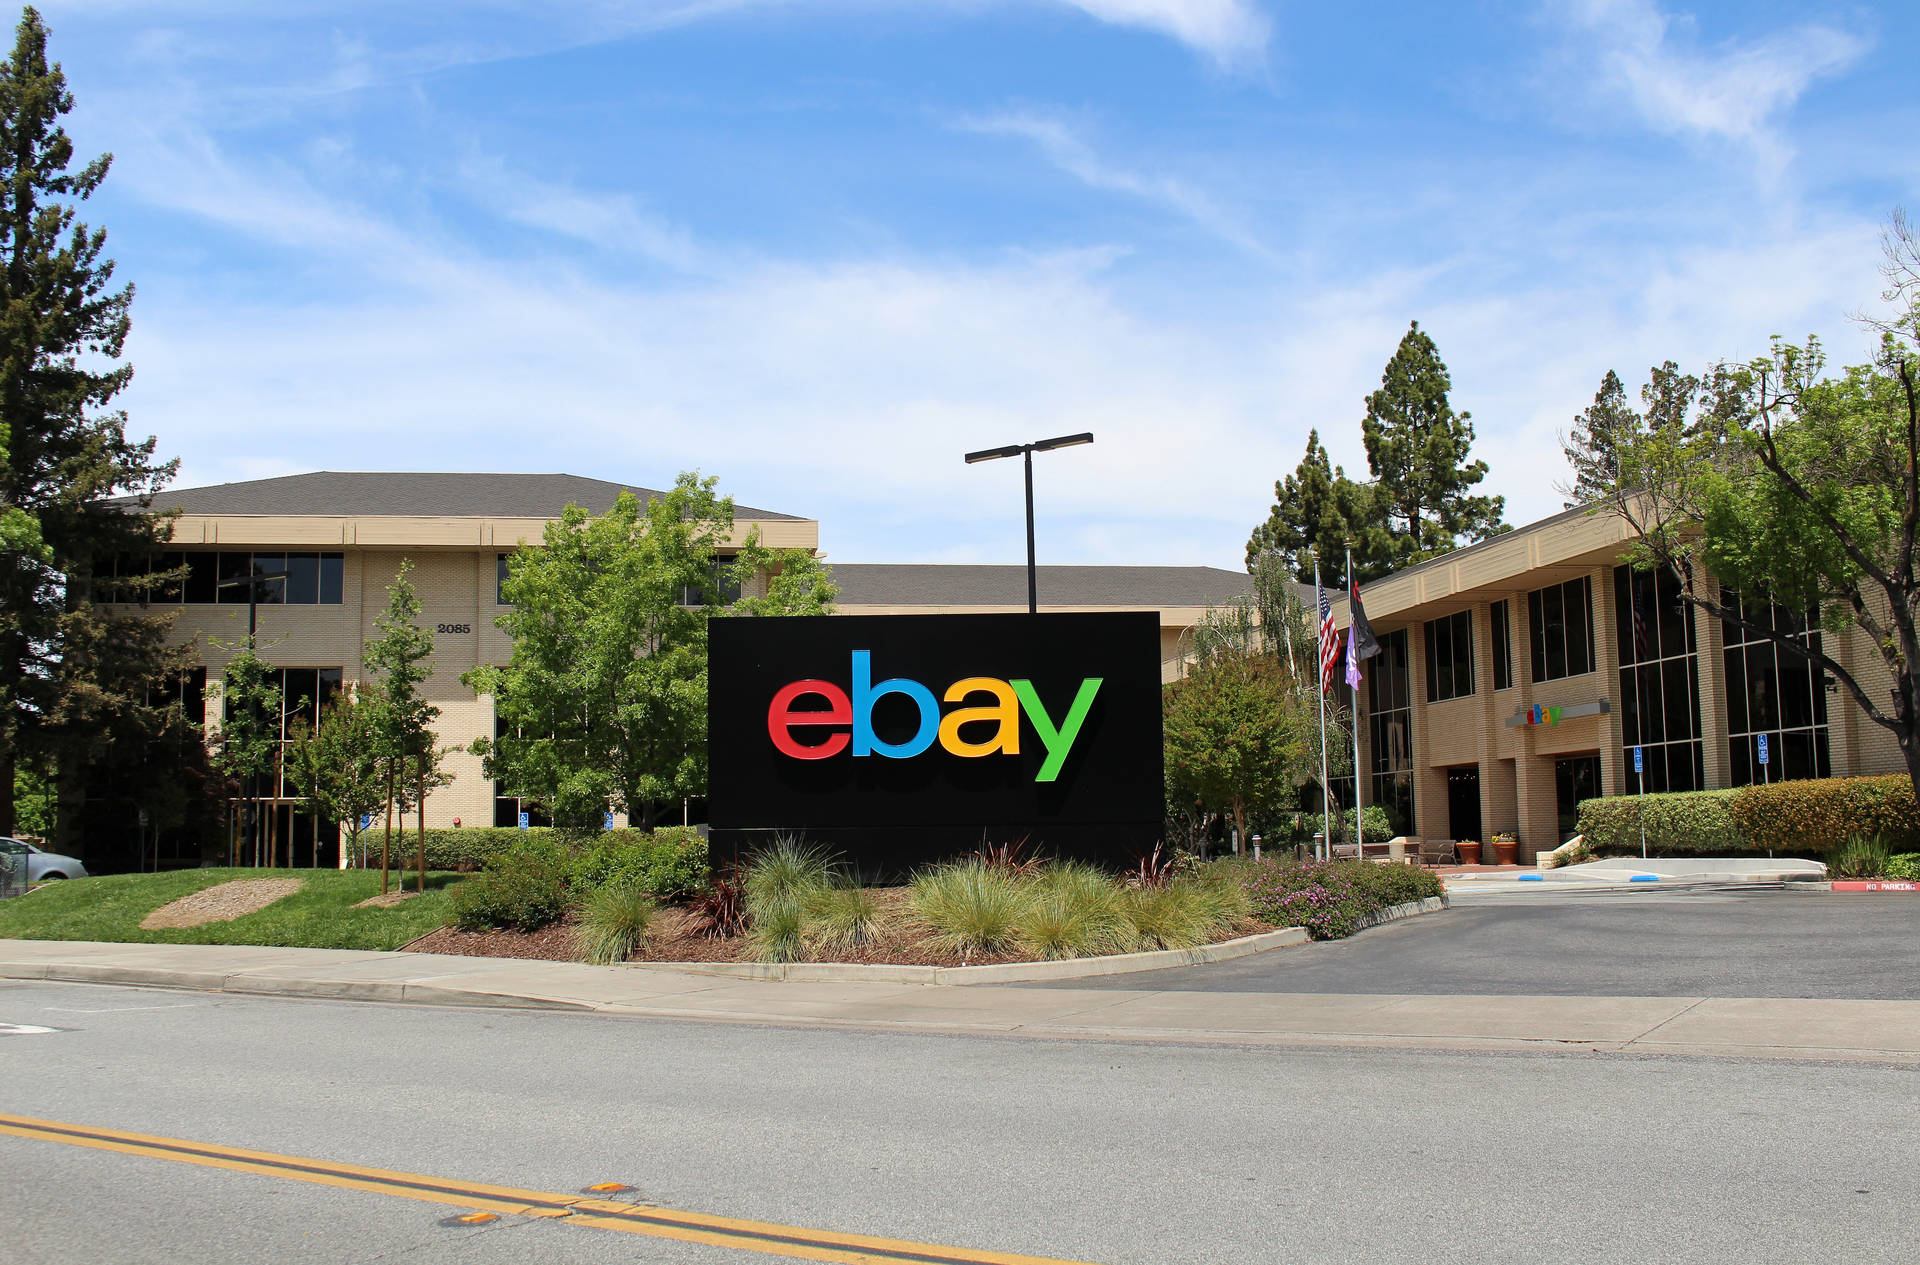 Ebay Sign Building Front Background